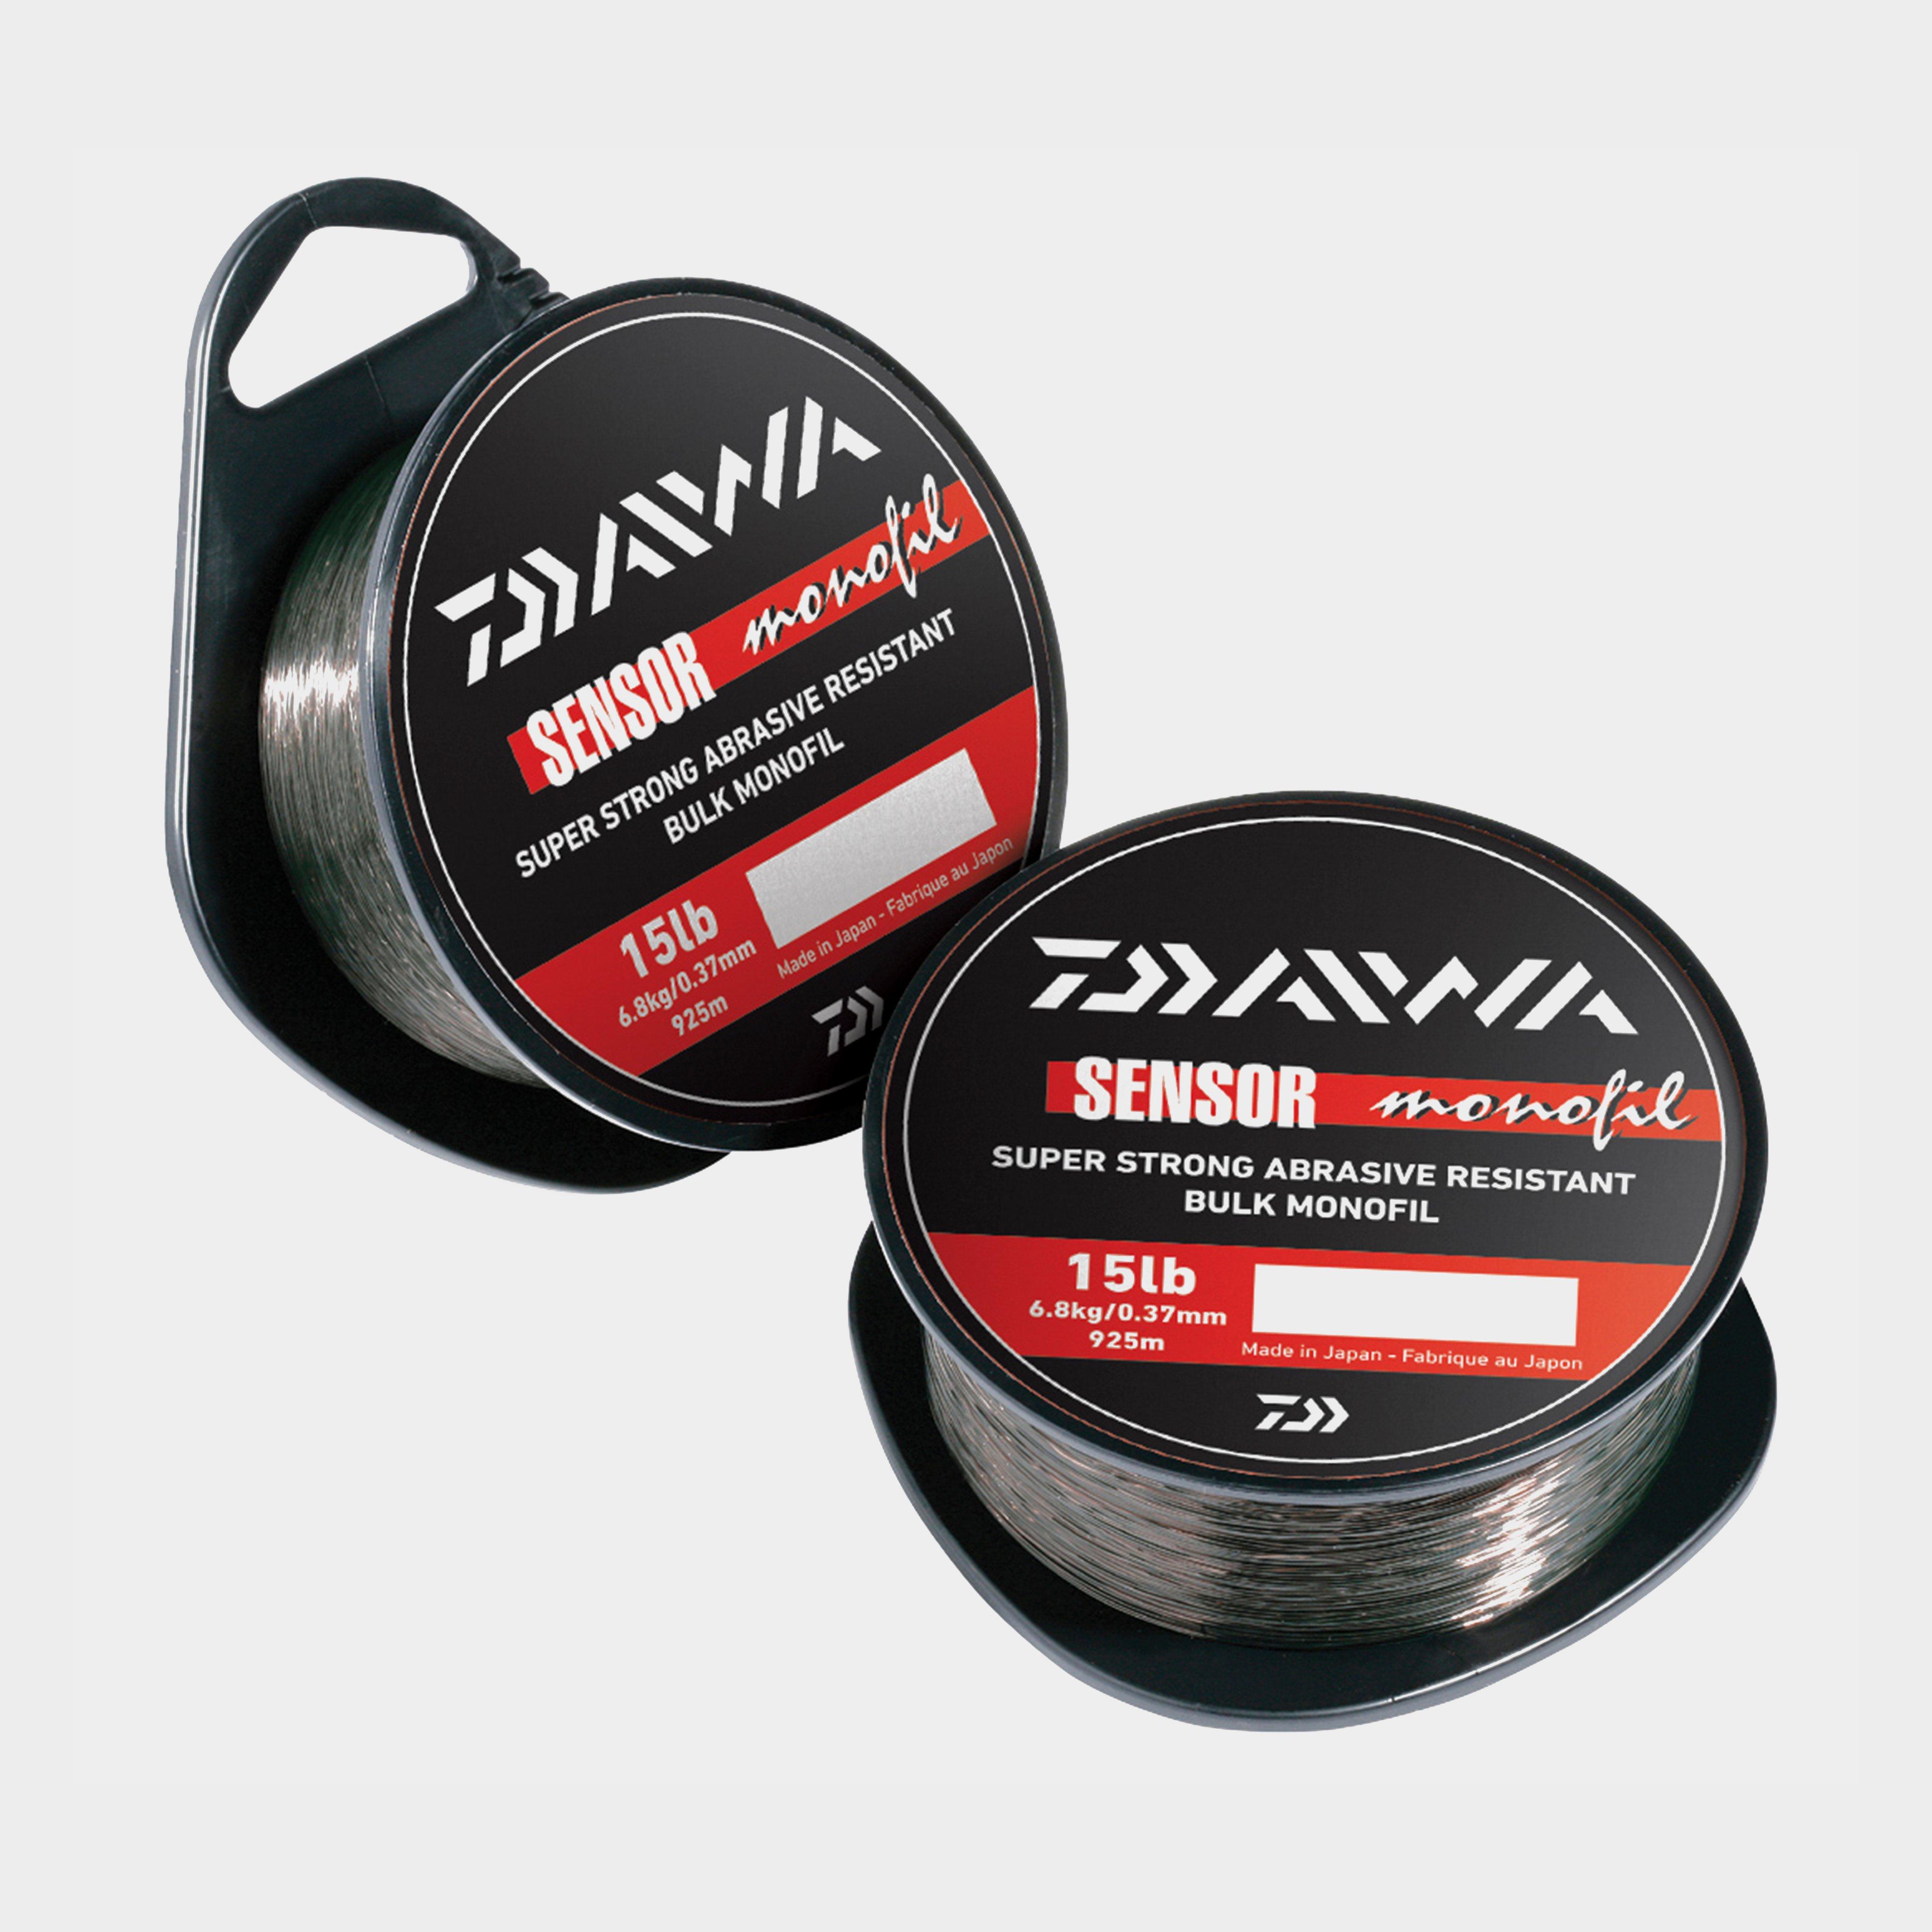 Daiwa Daiwa Sensor Monofil 300m 6lb - Black/6lb  Black/6lb